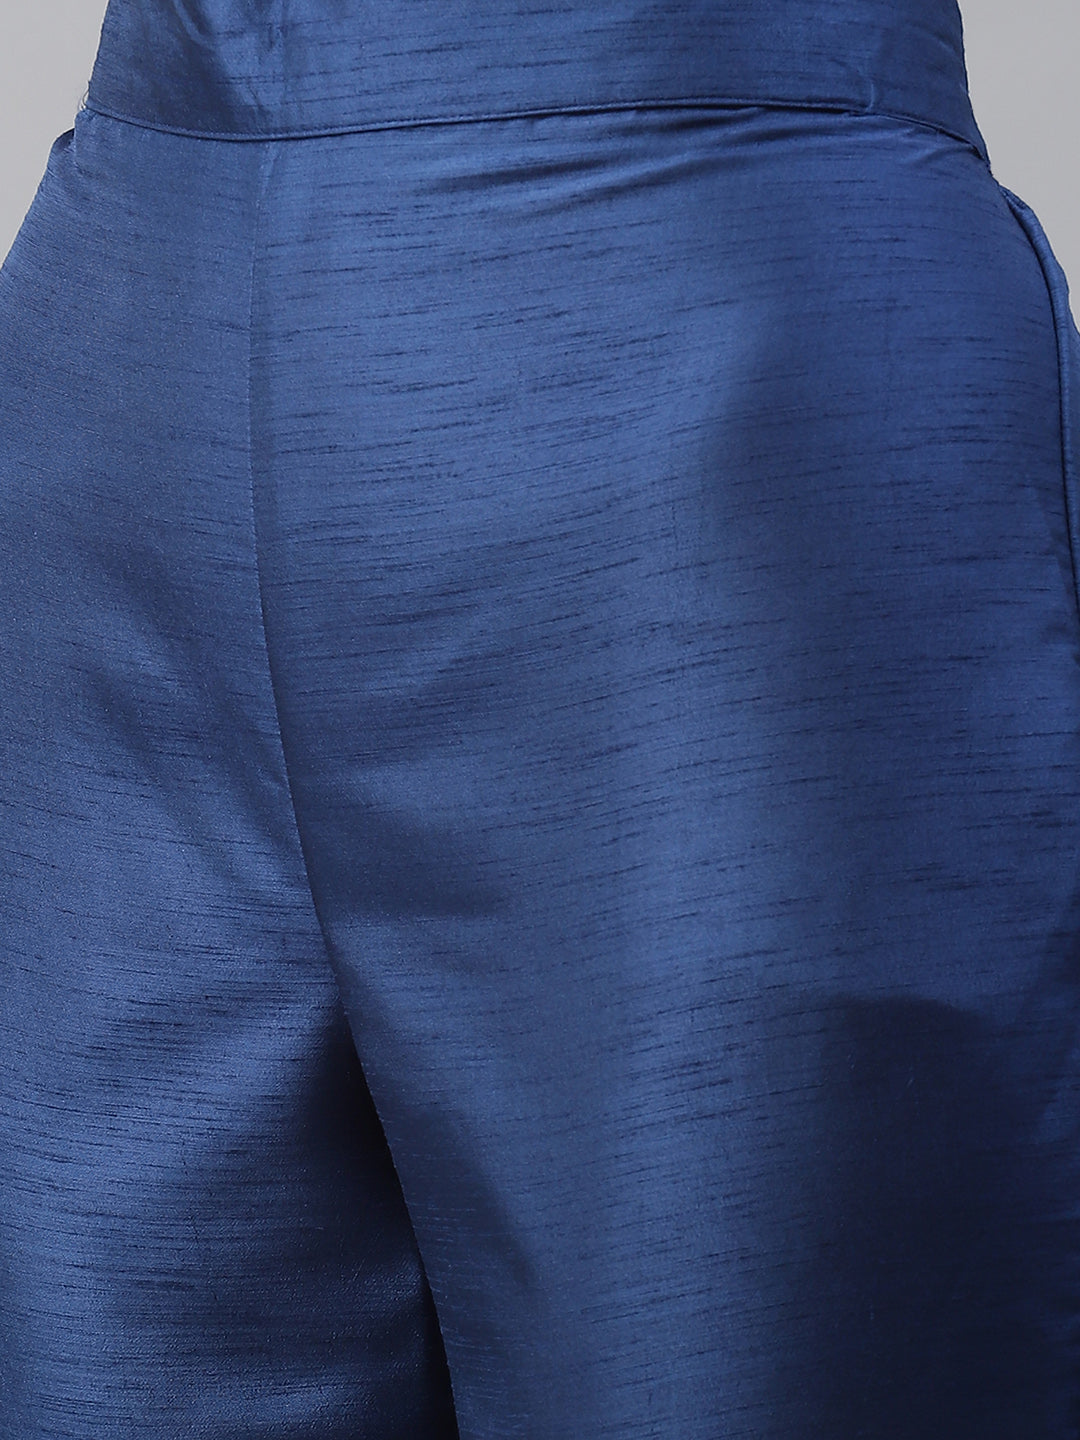 Women Blue Printed Silk Kurta and Pant Set by  (2 Pc Set) - Final Clearance Sale